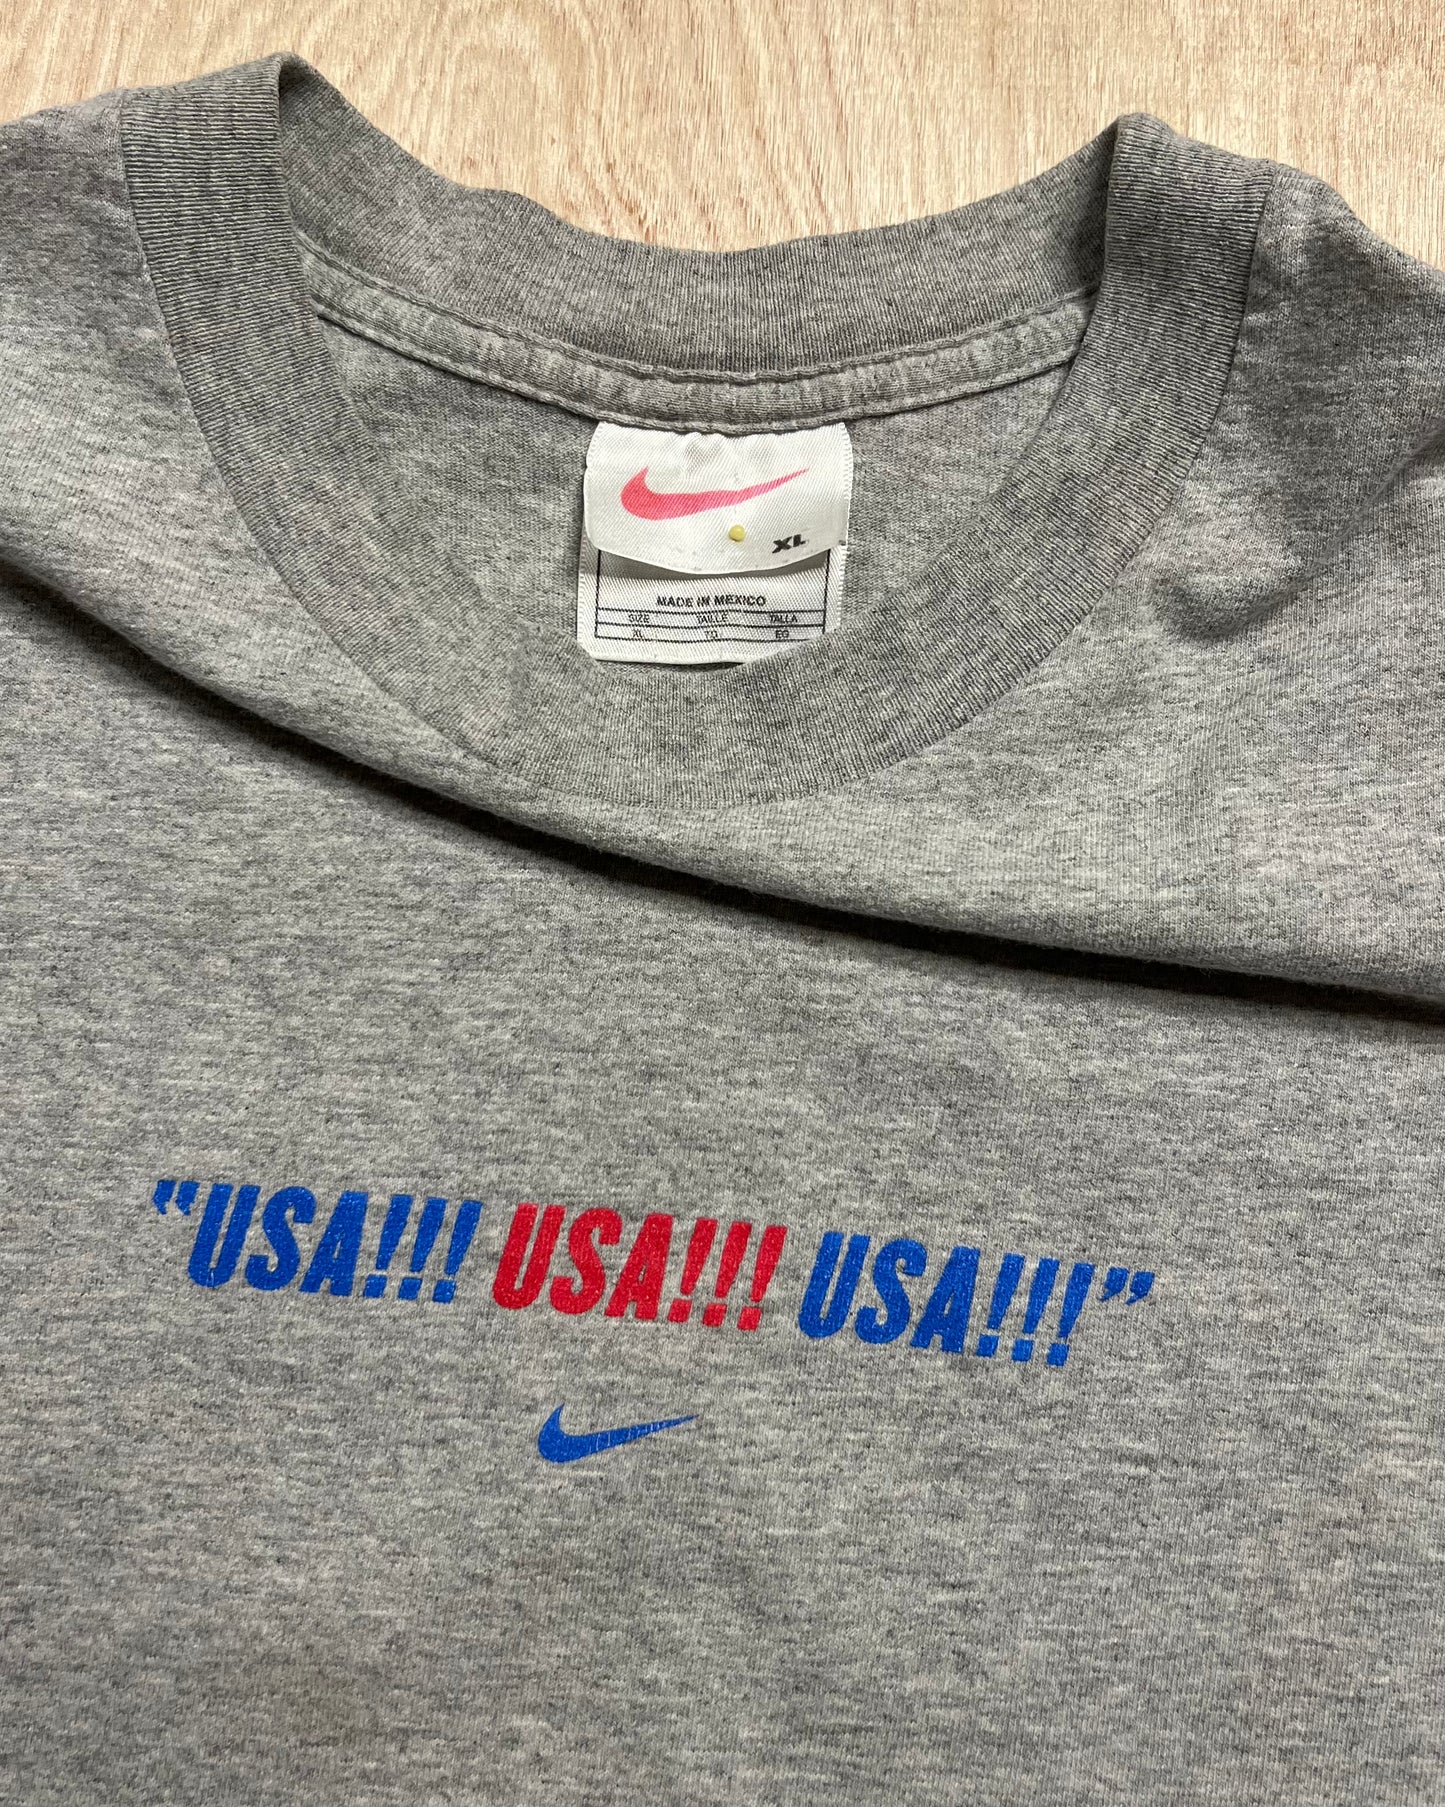 Vintage Nike "USA!!!" T-Shirt